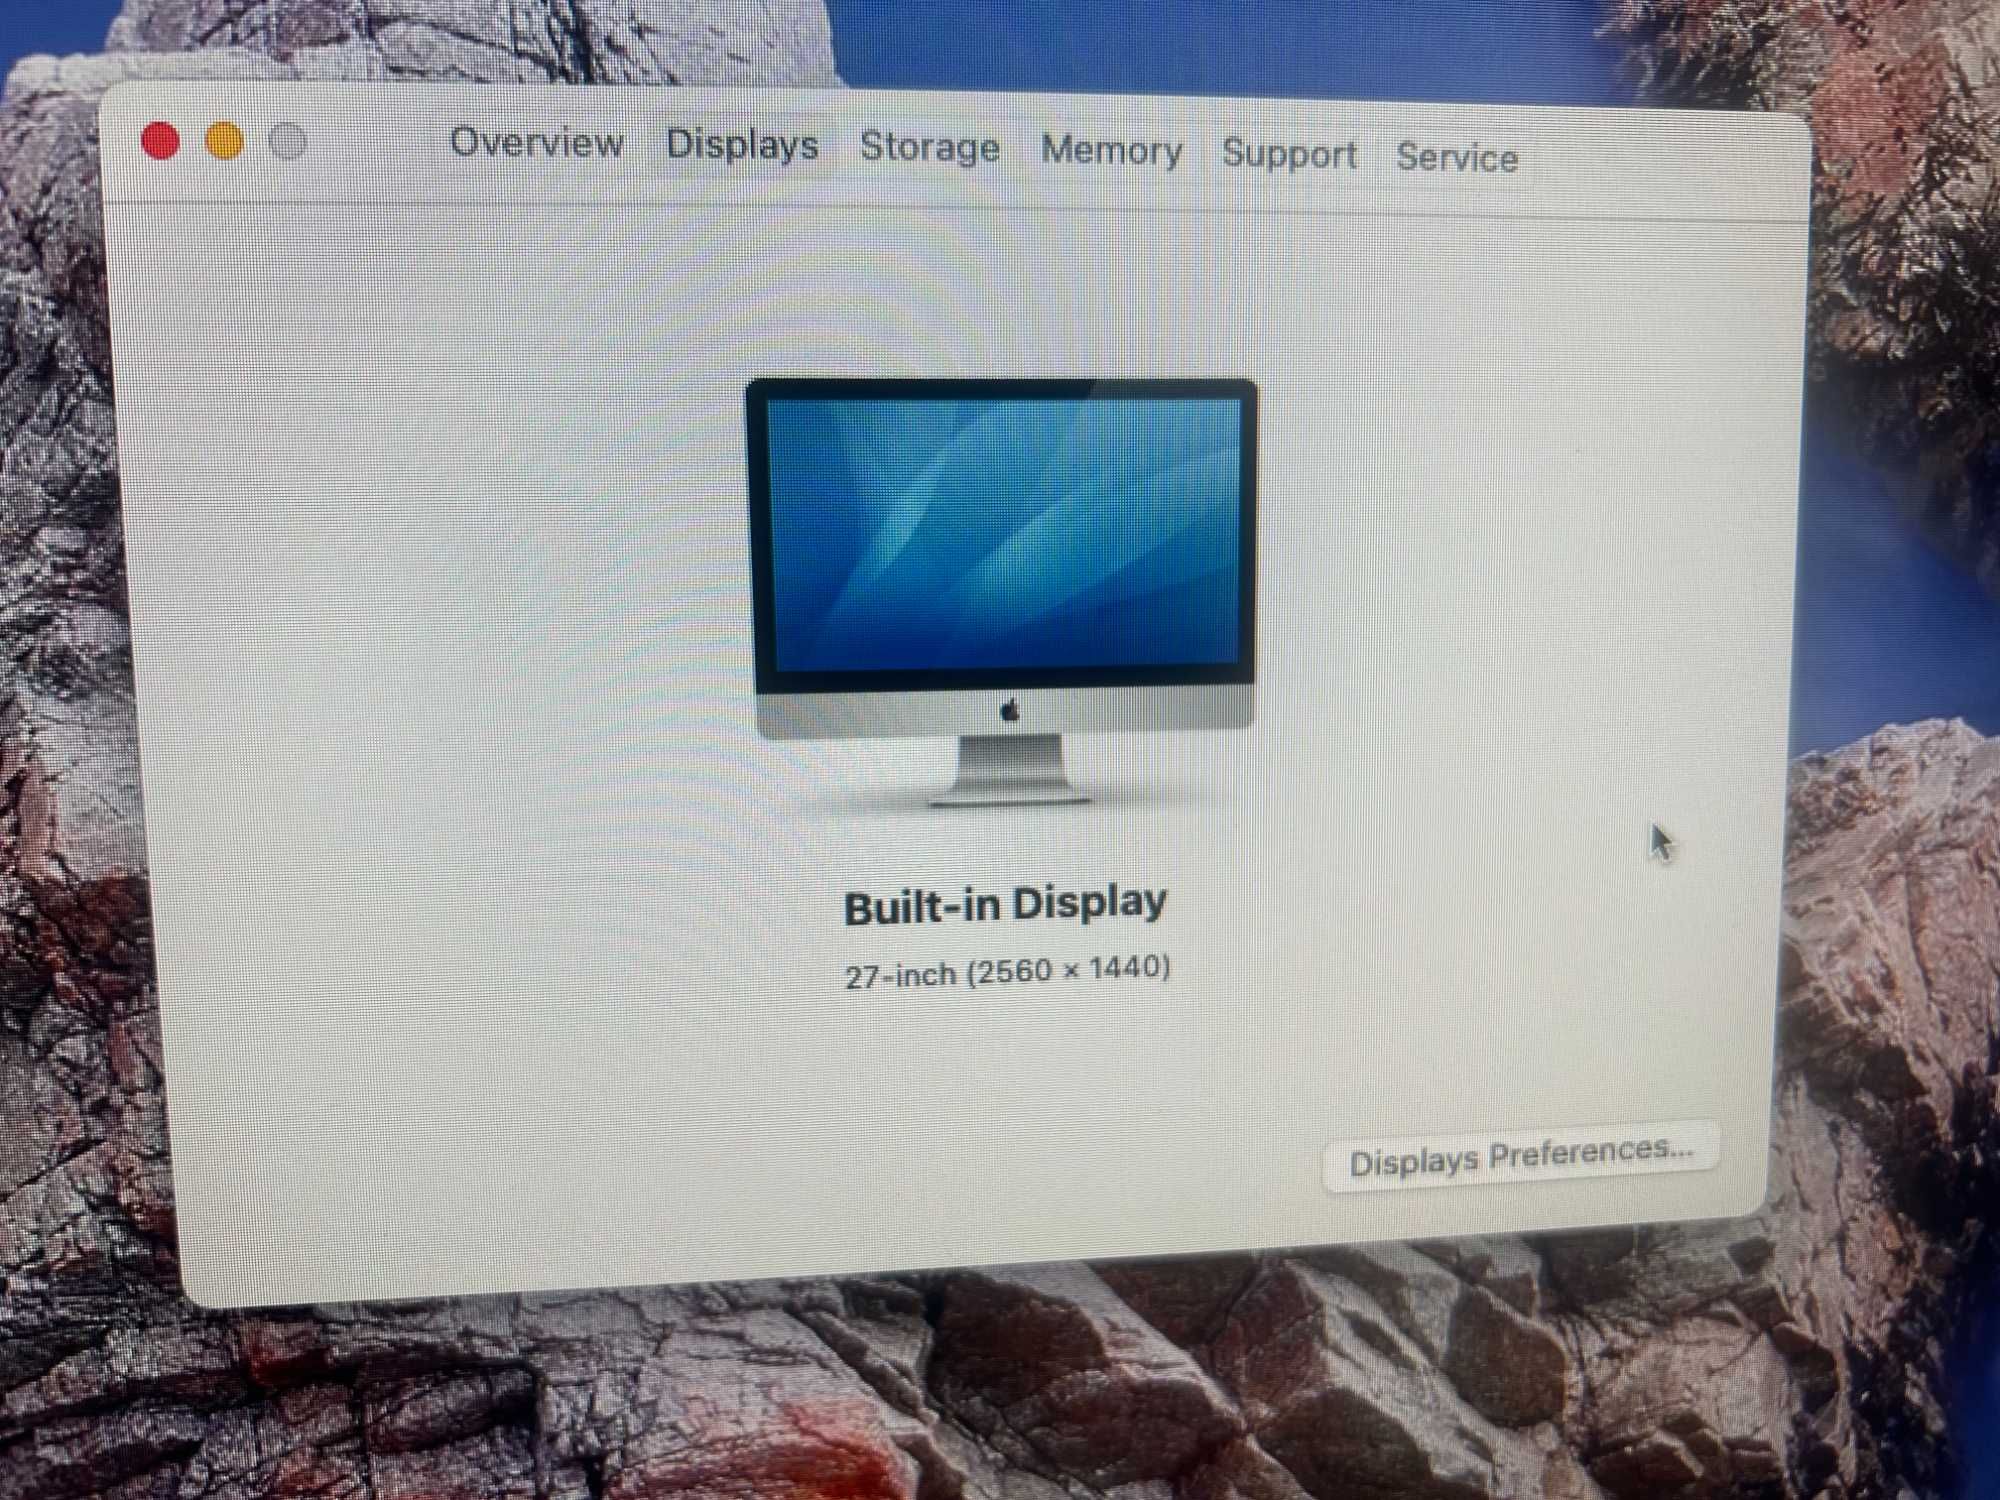 iMac 27 inch late 2013